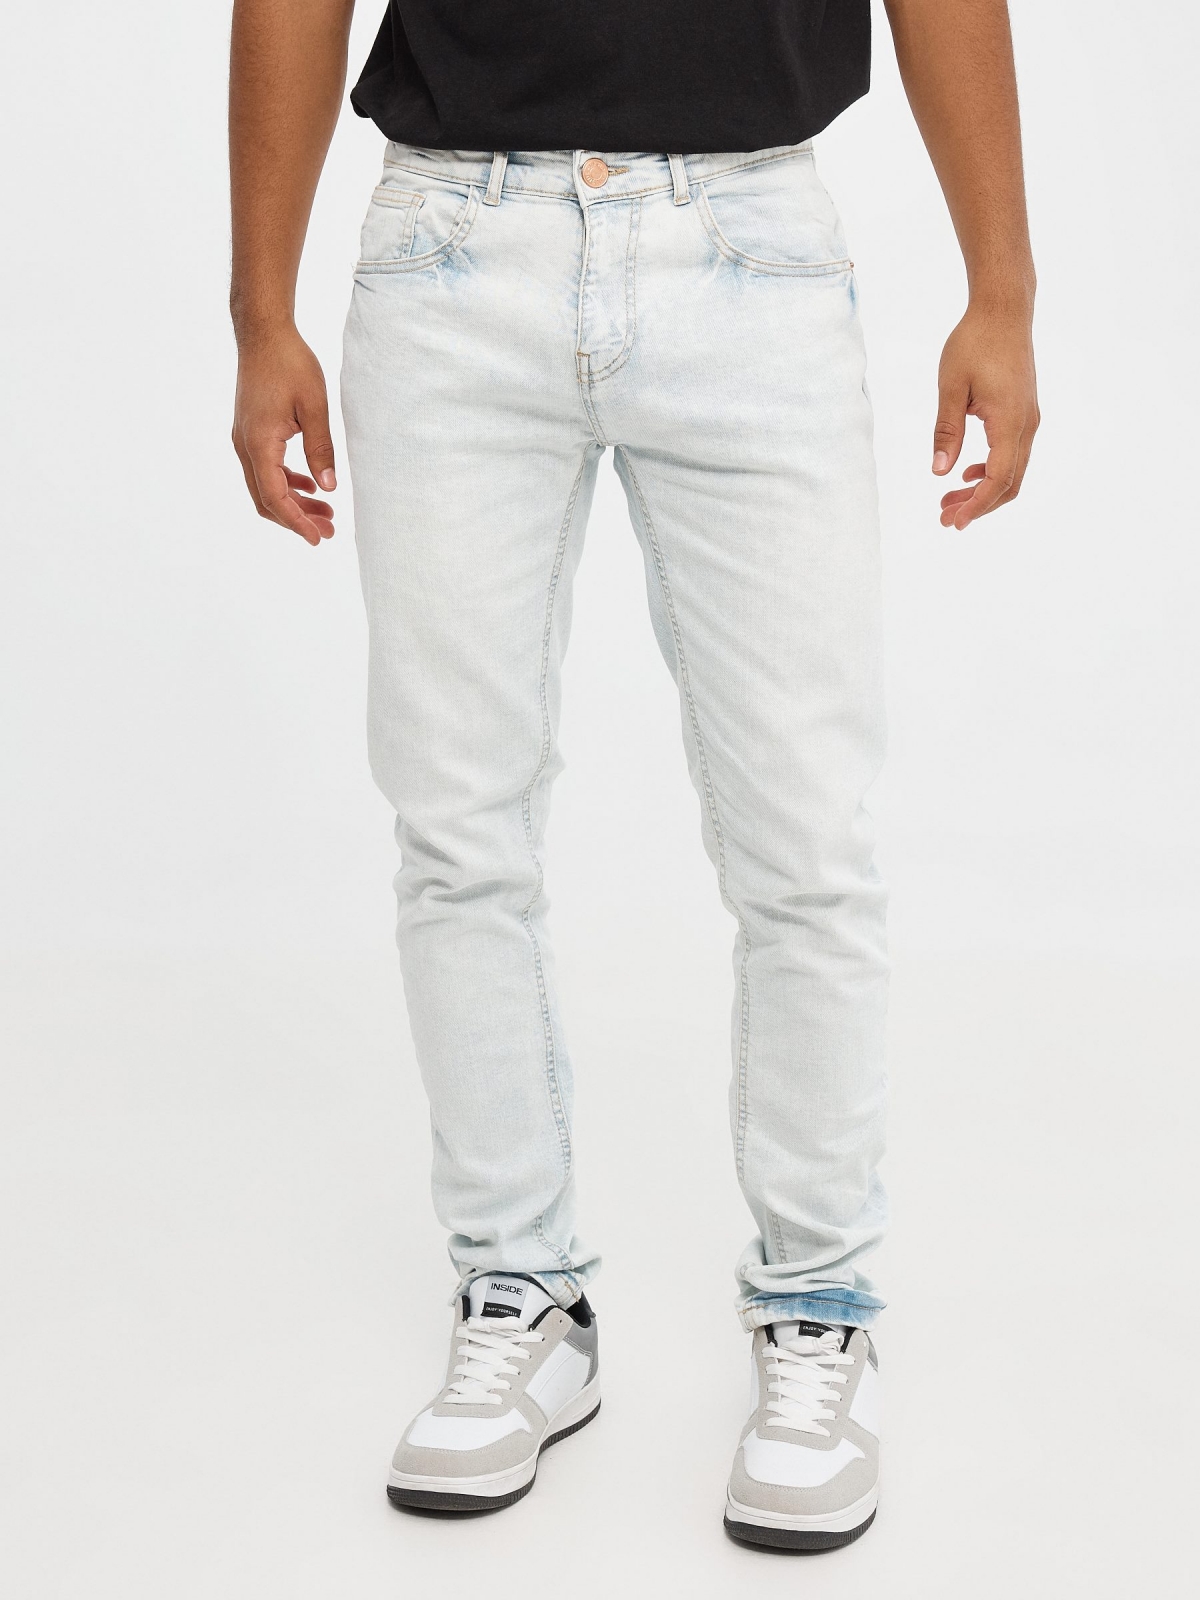 Jeans super slim azul claro azul vista media frontal